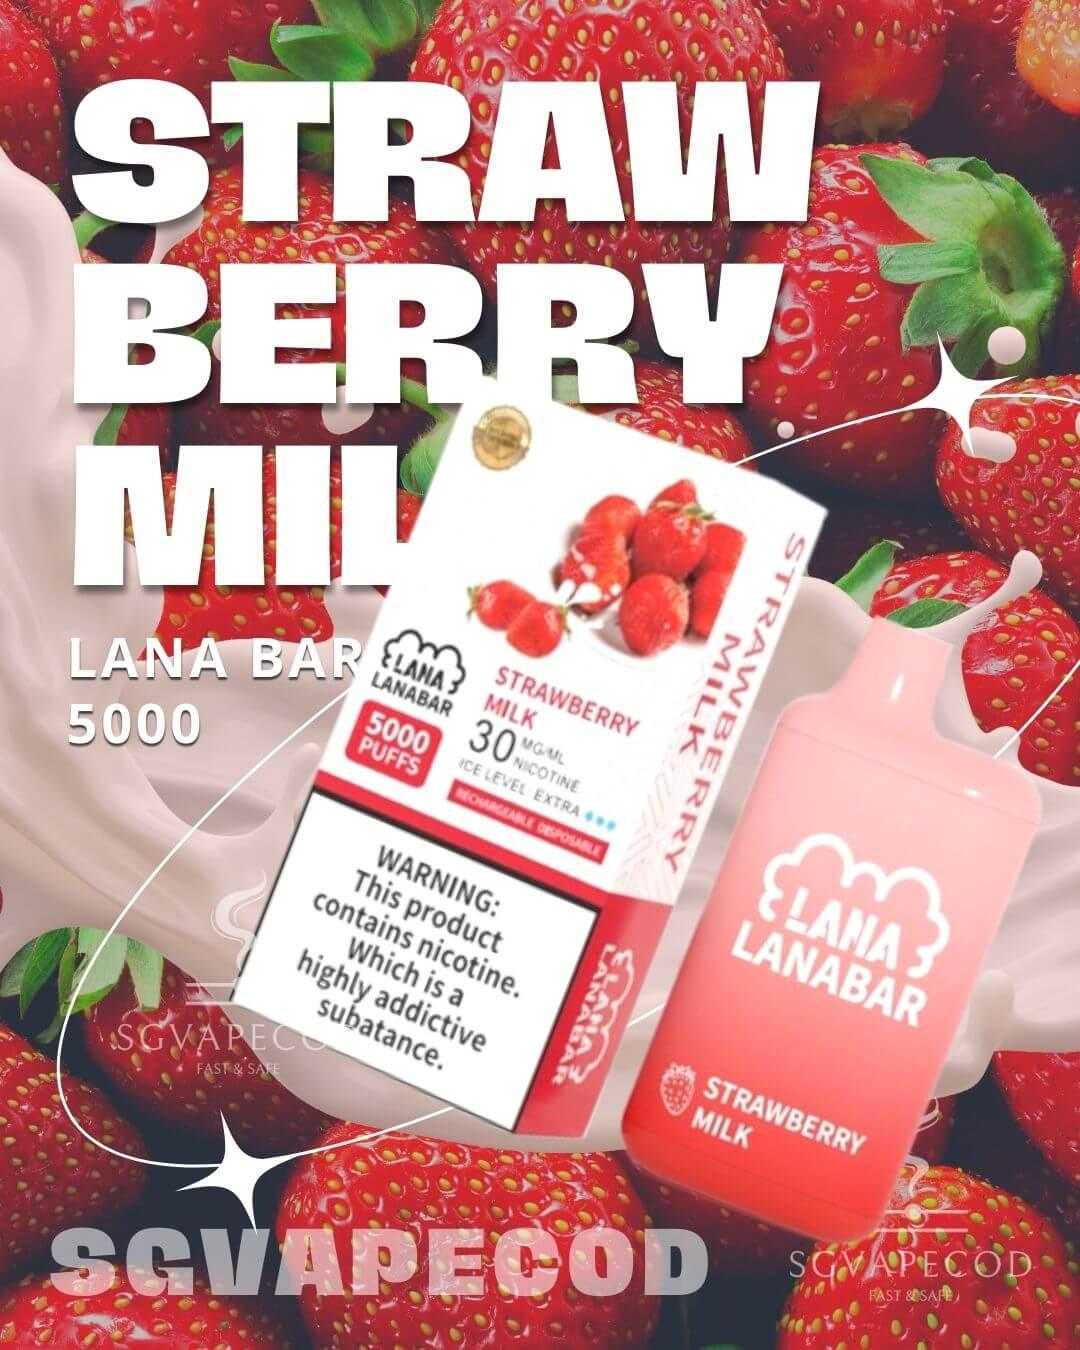 Lana bar 5000-Strawberry Milk